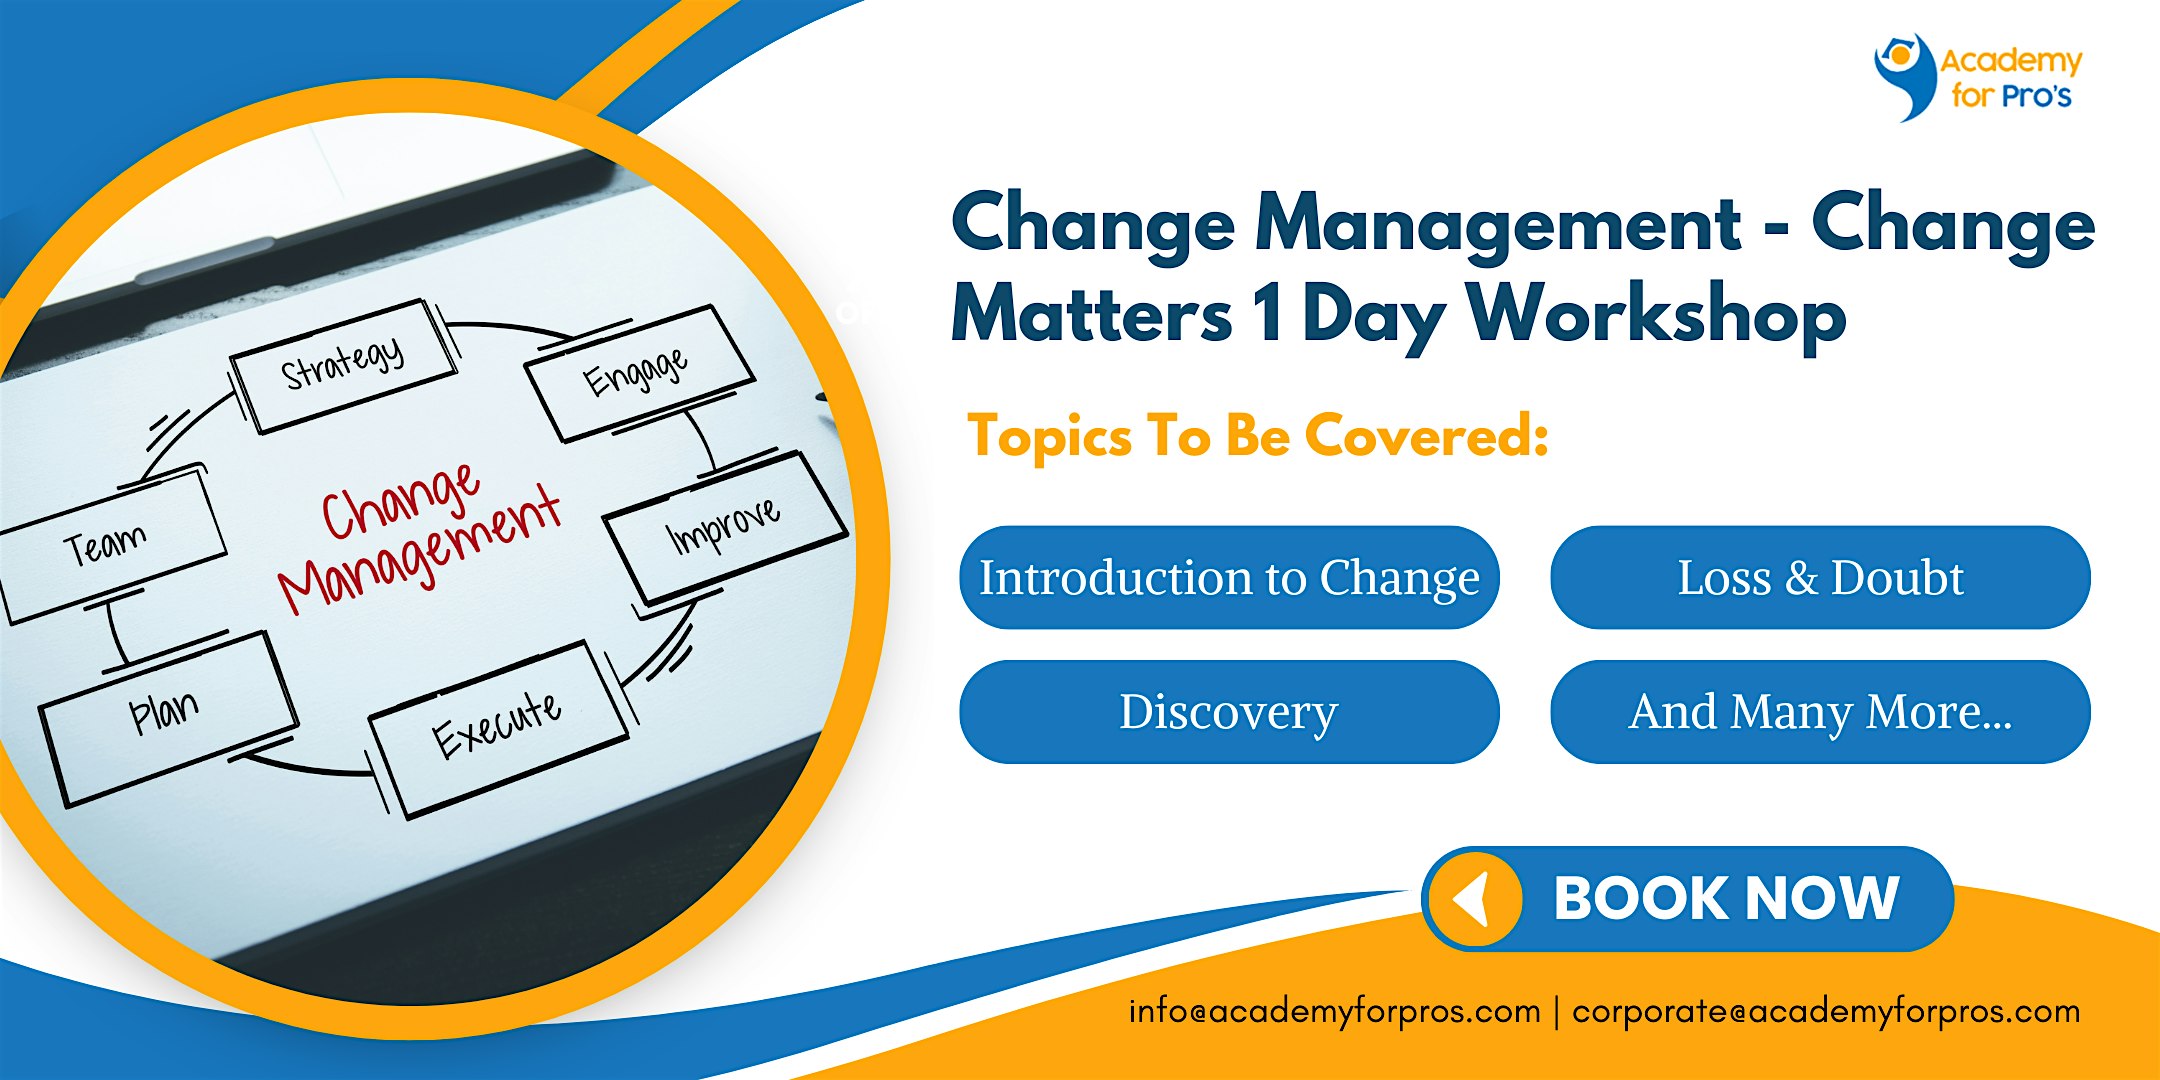 Change Management - Change Matters 1 Day Workshop in Chicago, IL